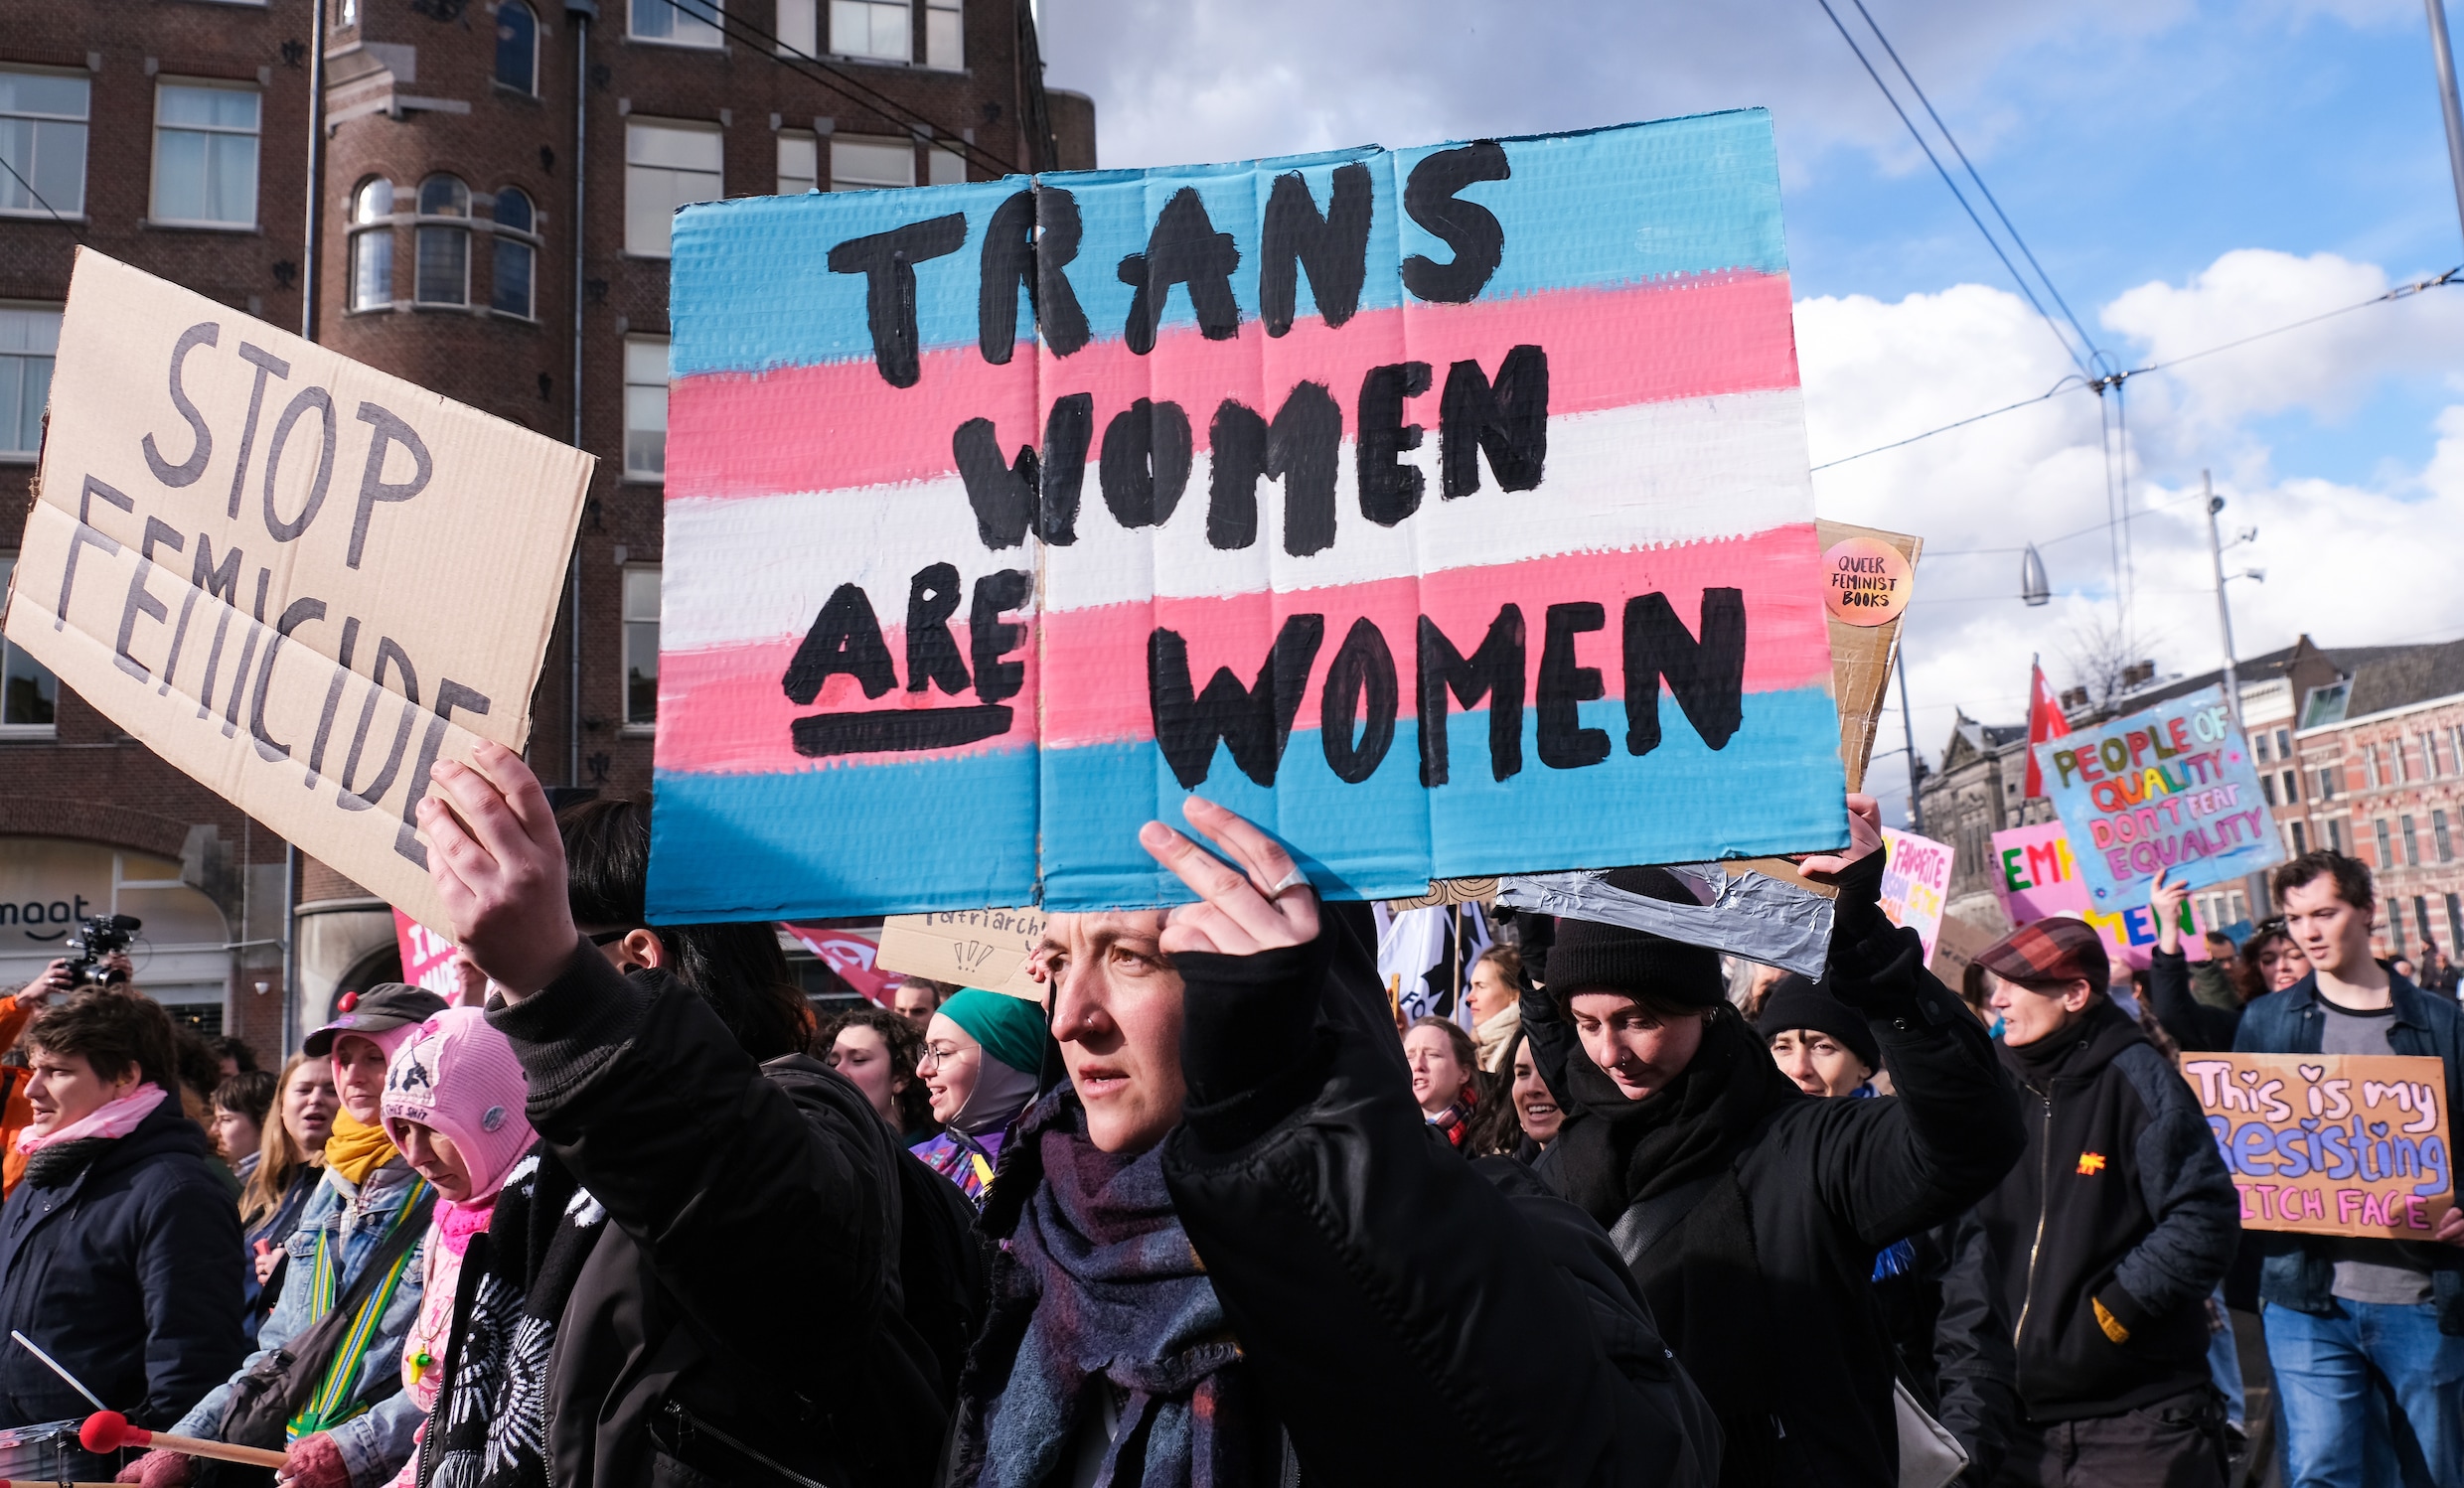 Meerderheid Tweede Kamer wil dat voorstel Transgenderwet wordt ...